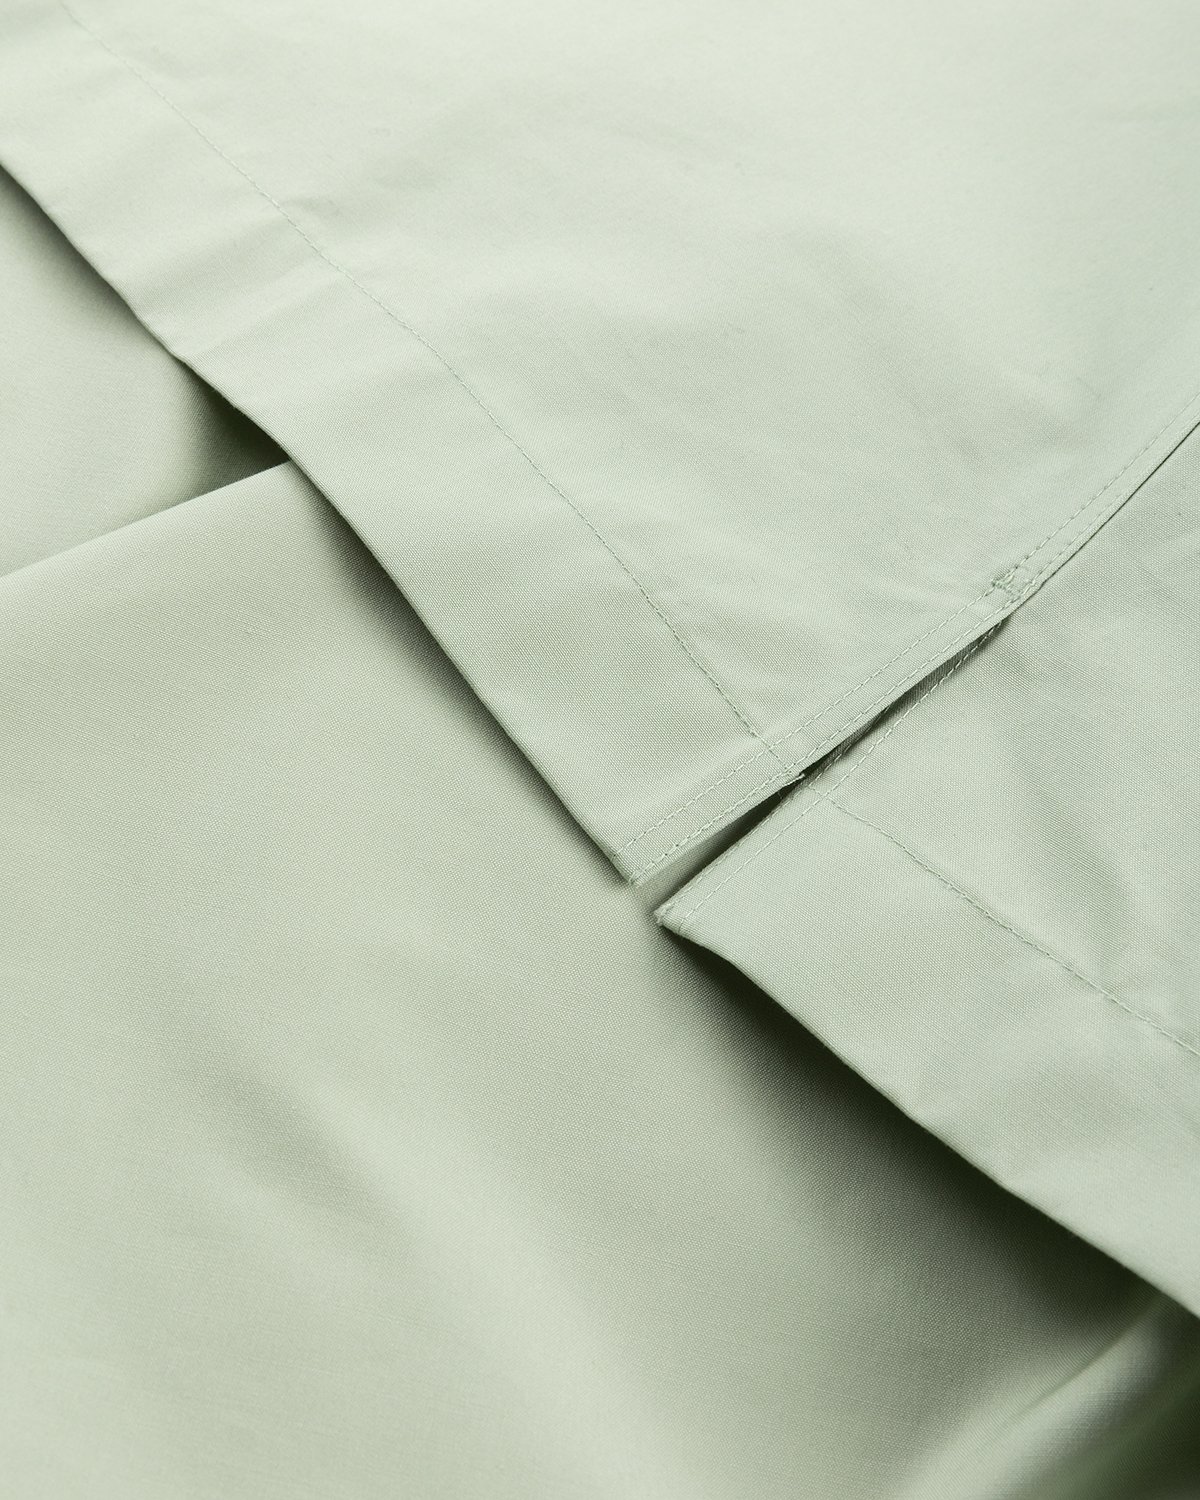 Jil Sander - Two-Tone Diagonal Cut Shirt Black/Green - Clothing - Green - Image 4